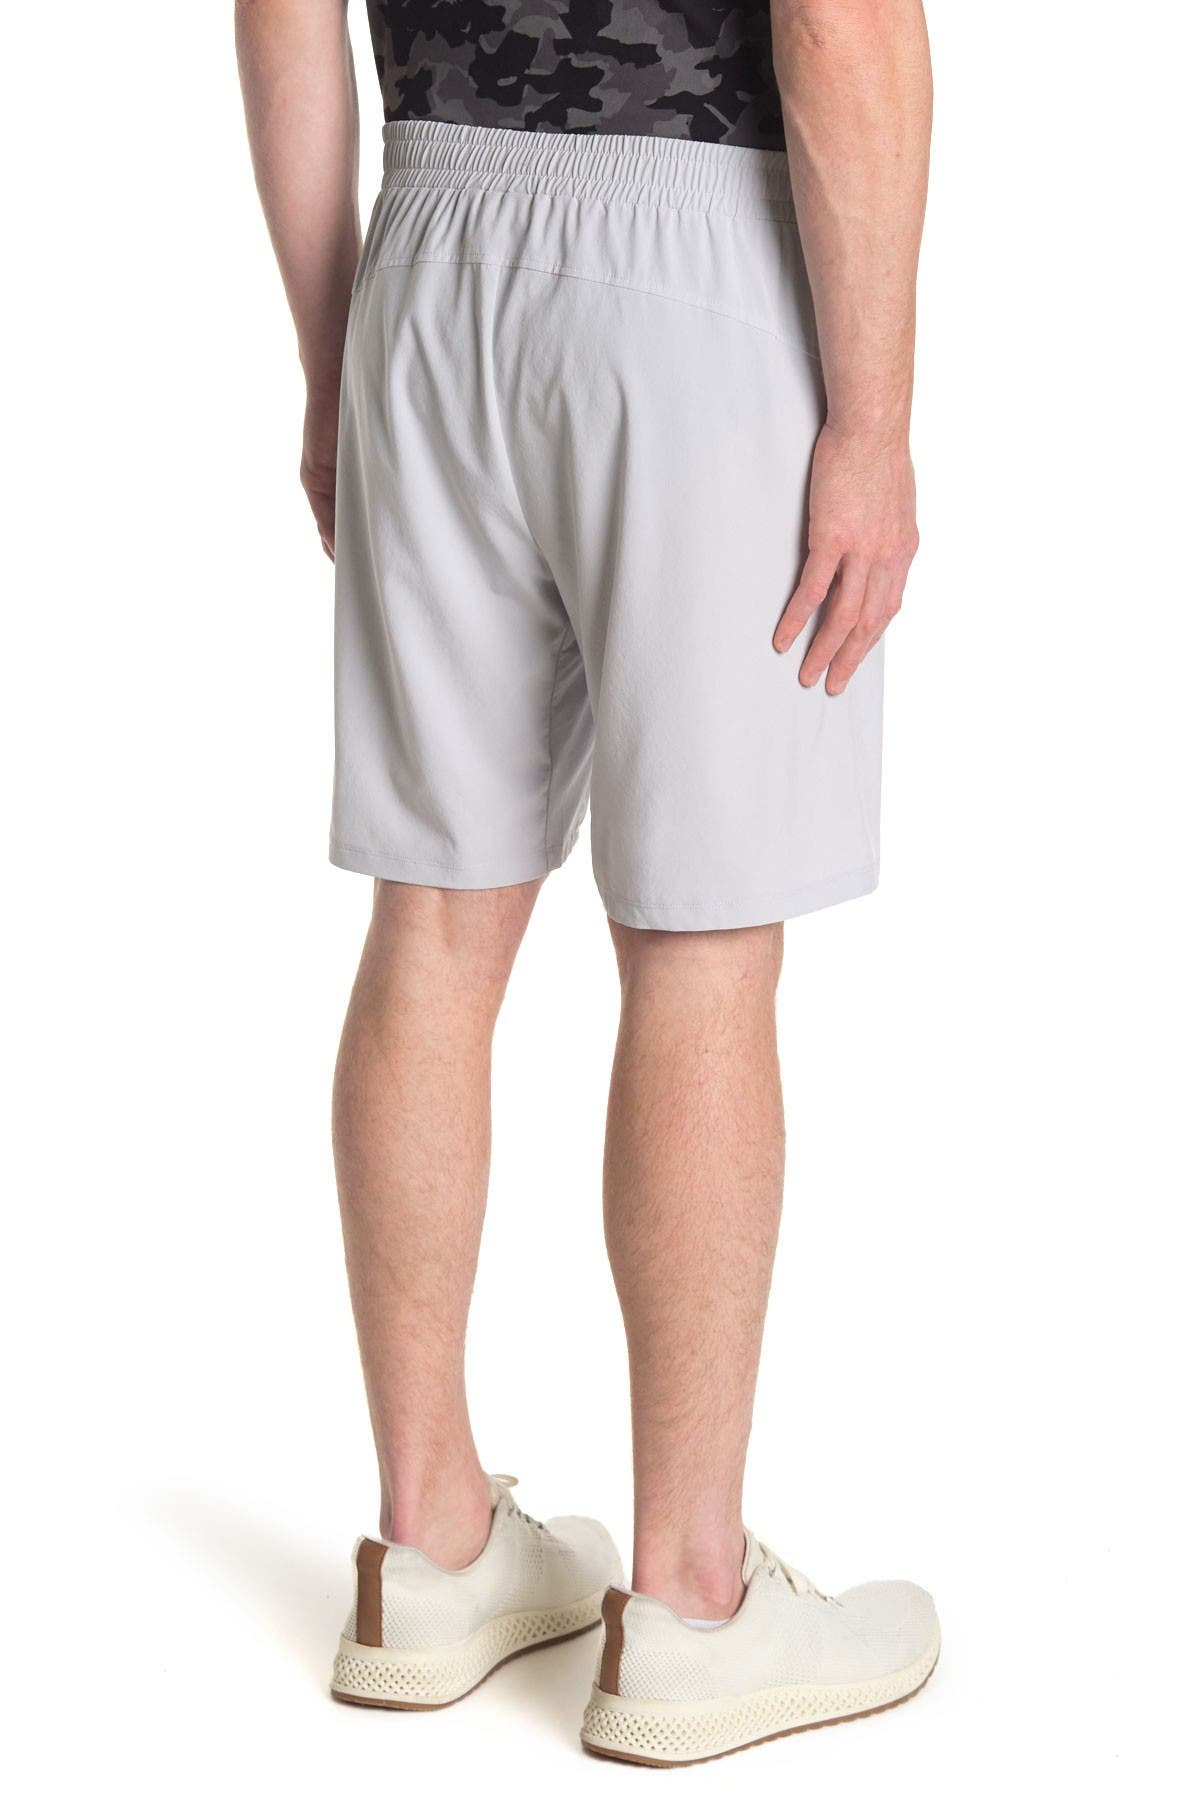 Z By Zella Traverse Woven Shorts In Grey Micro